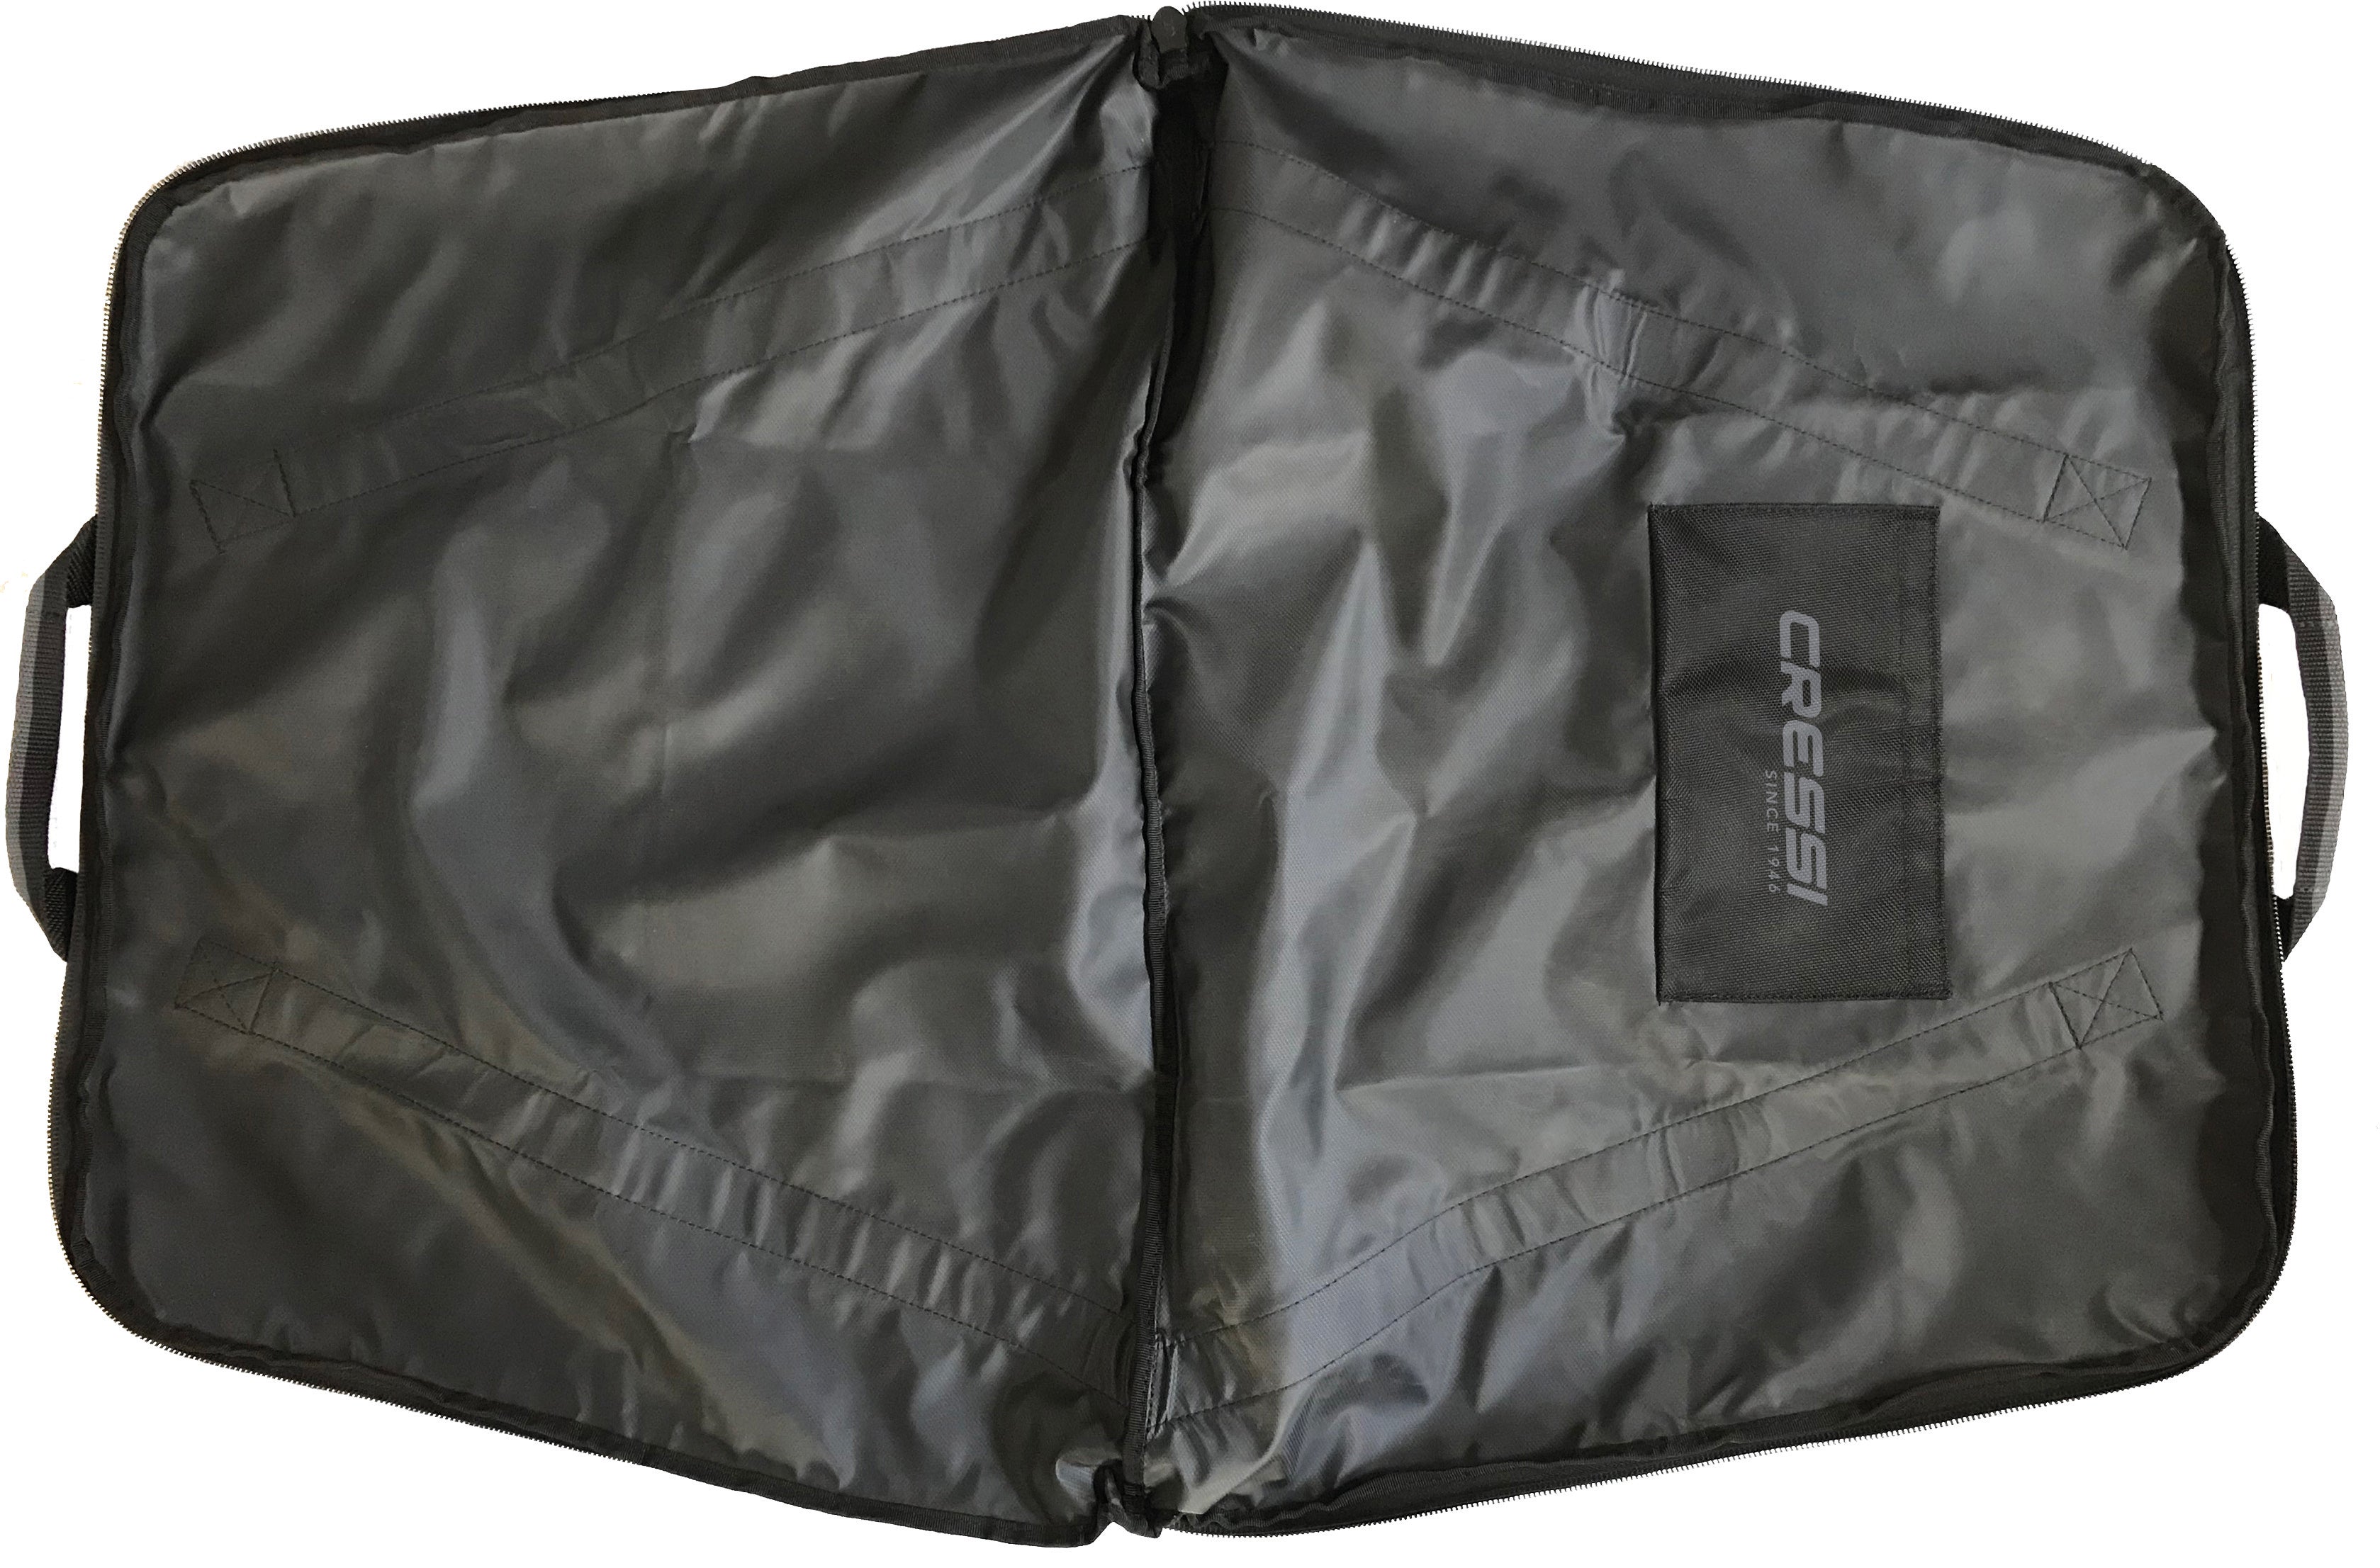 Cressi Dry Wetsuit Bag - Umziehmatte